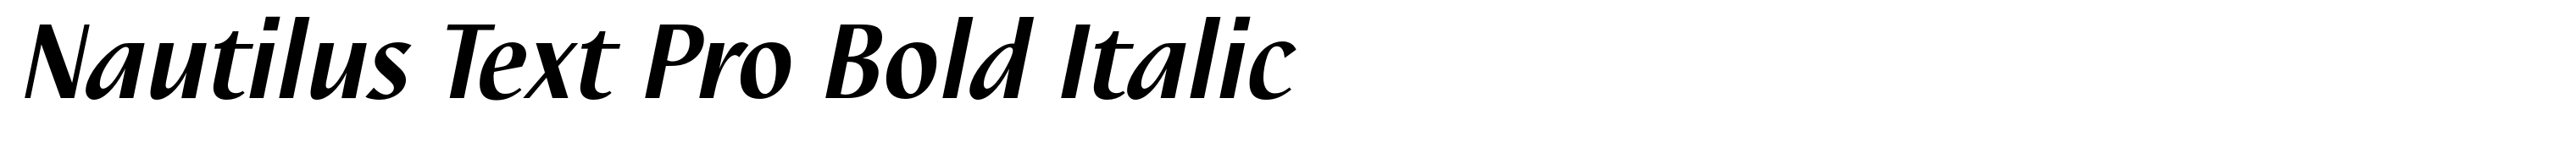 Nautilus Text Pro Bold Italic